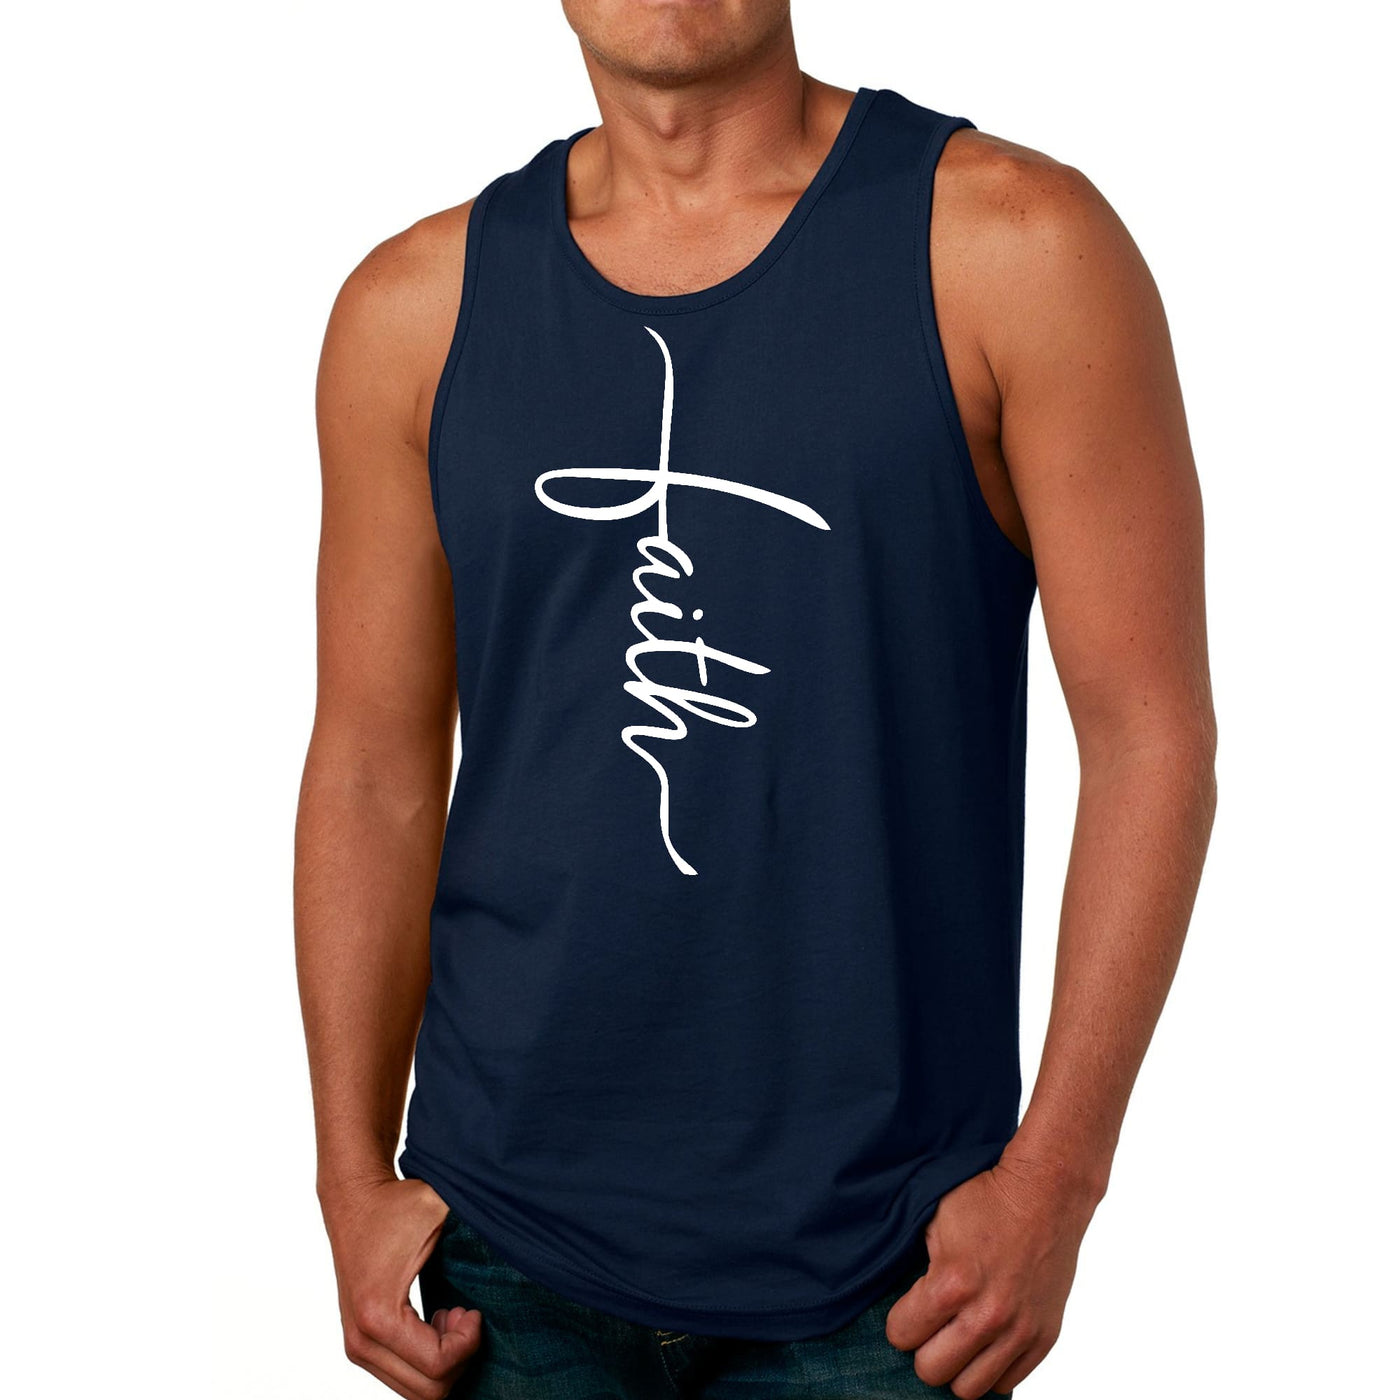 Mens Tank Top Fitness T - shirt Faith Script Cross Illustration - Tops